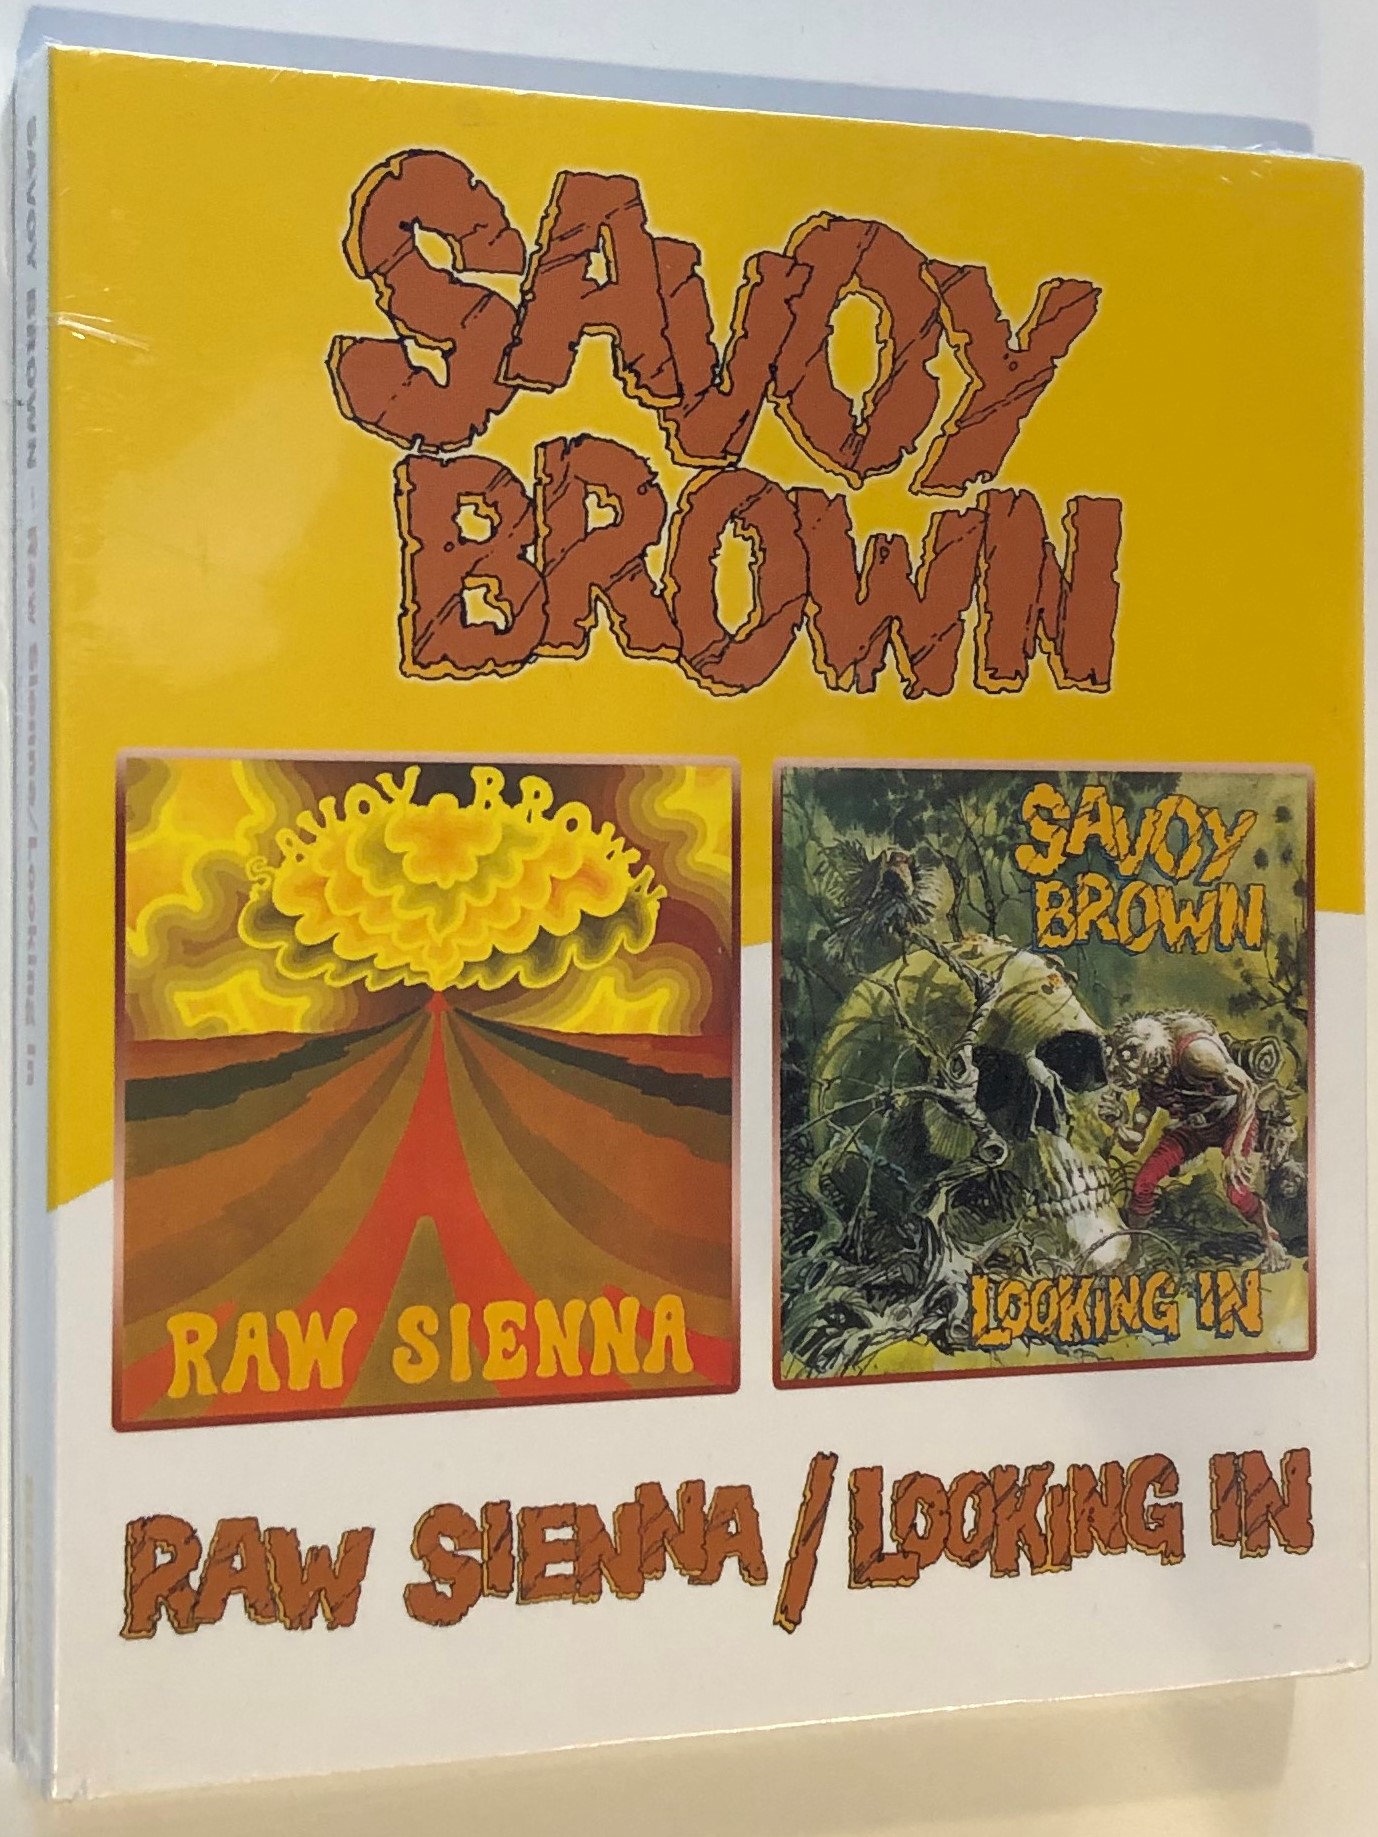 savoy-brown-raw-siennalooking-in-bgo-records-audio-cd-2005-bgocd666-1-.jpg